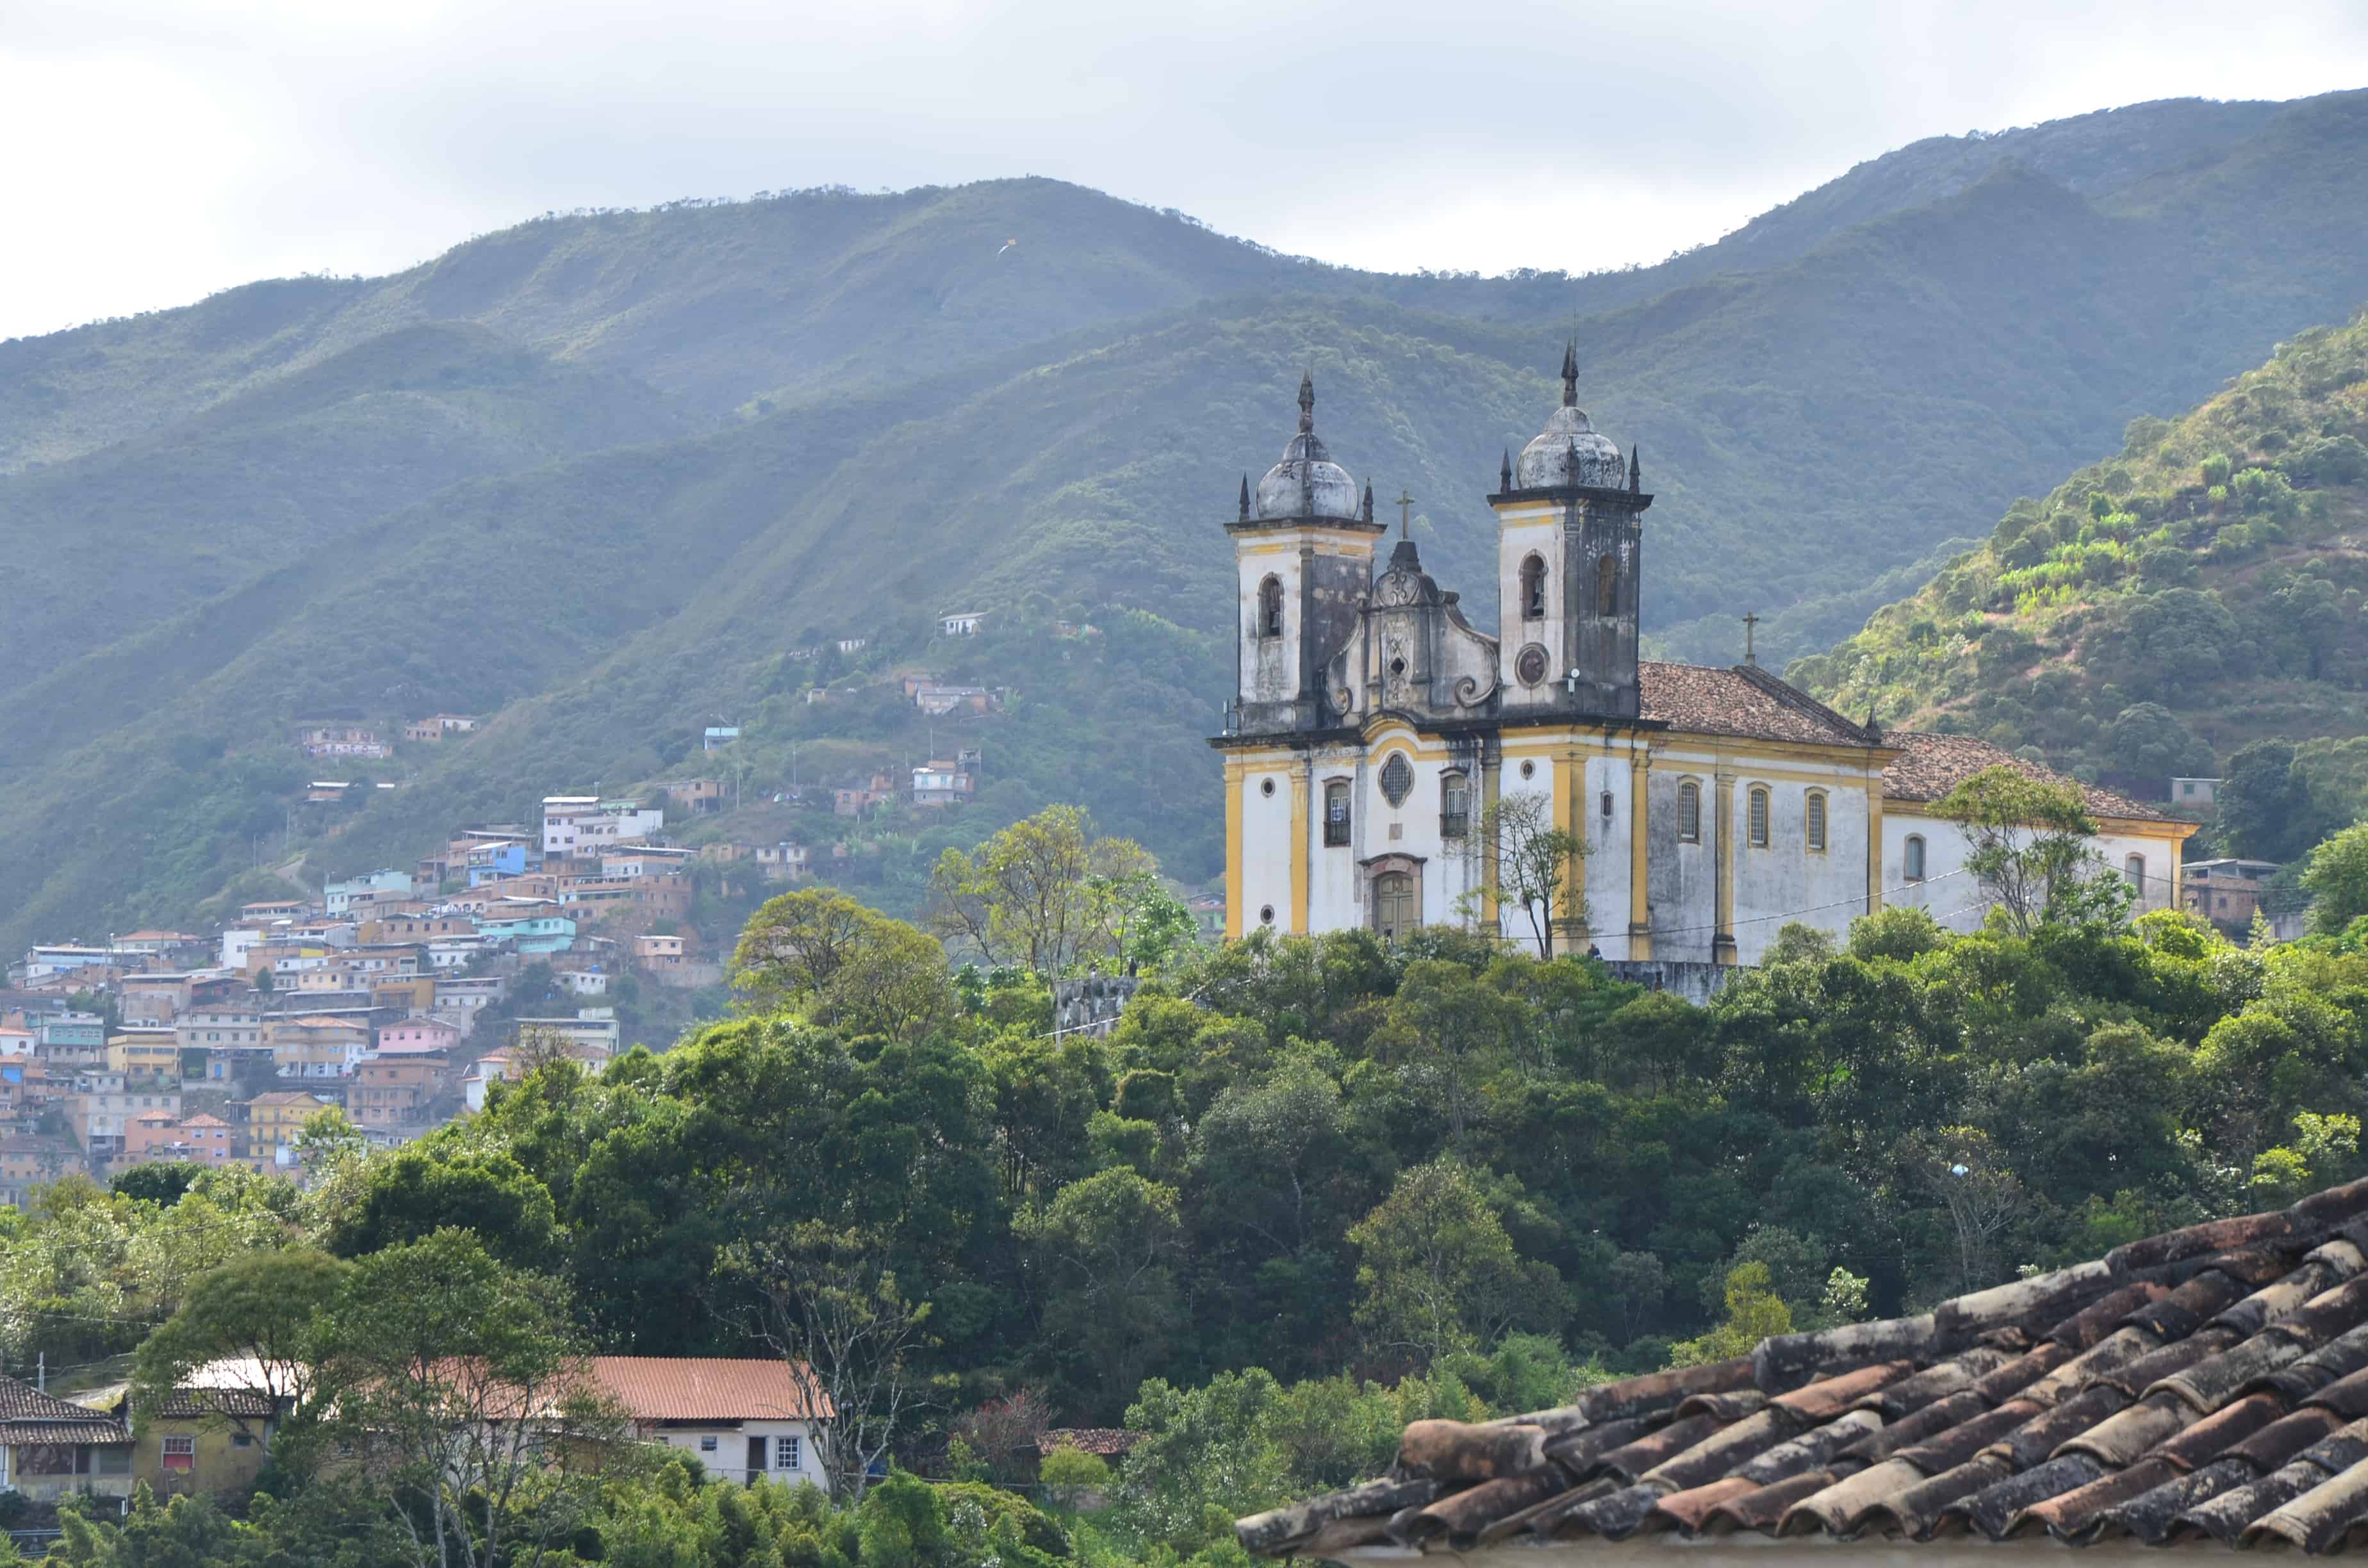 São Francisco de Paula in Ouro Preto, Brazil